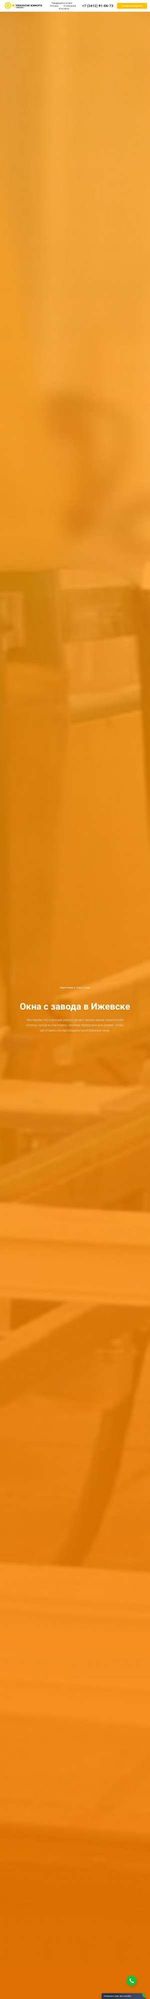 Предпросмотр для teh-kom18.ru — Технологии комфорта